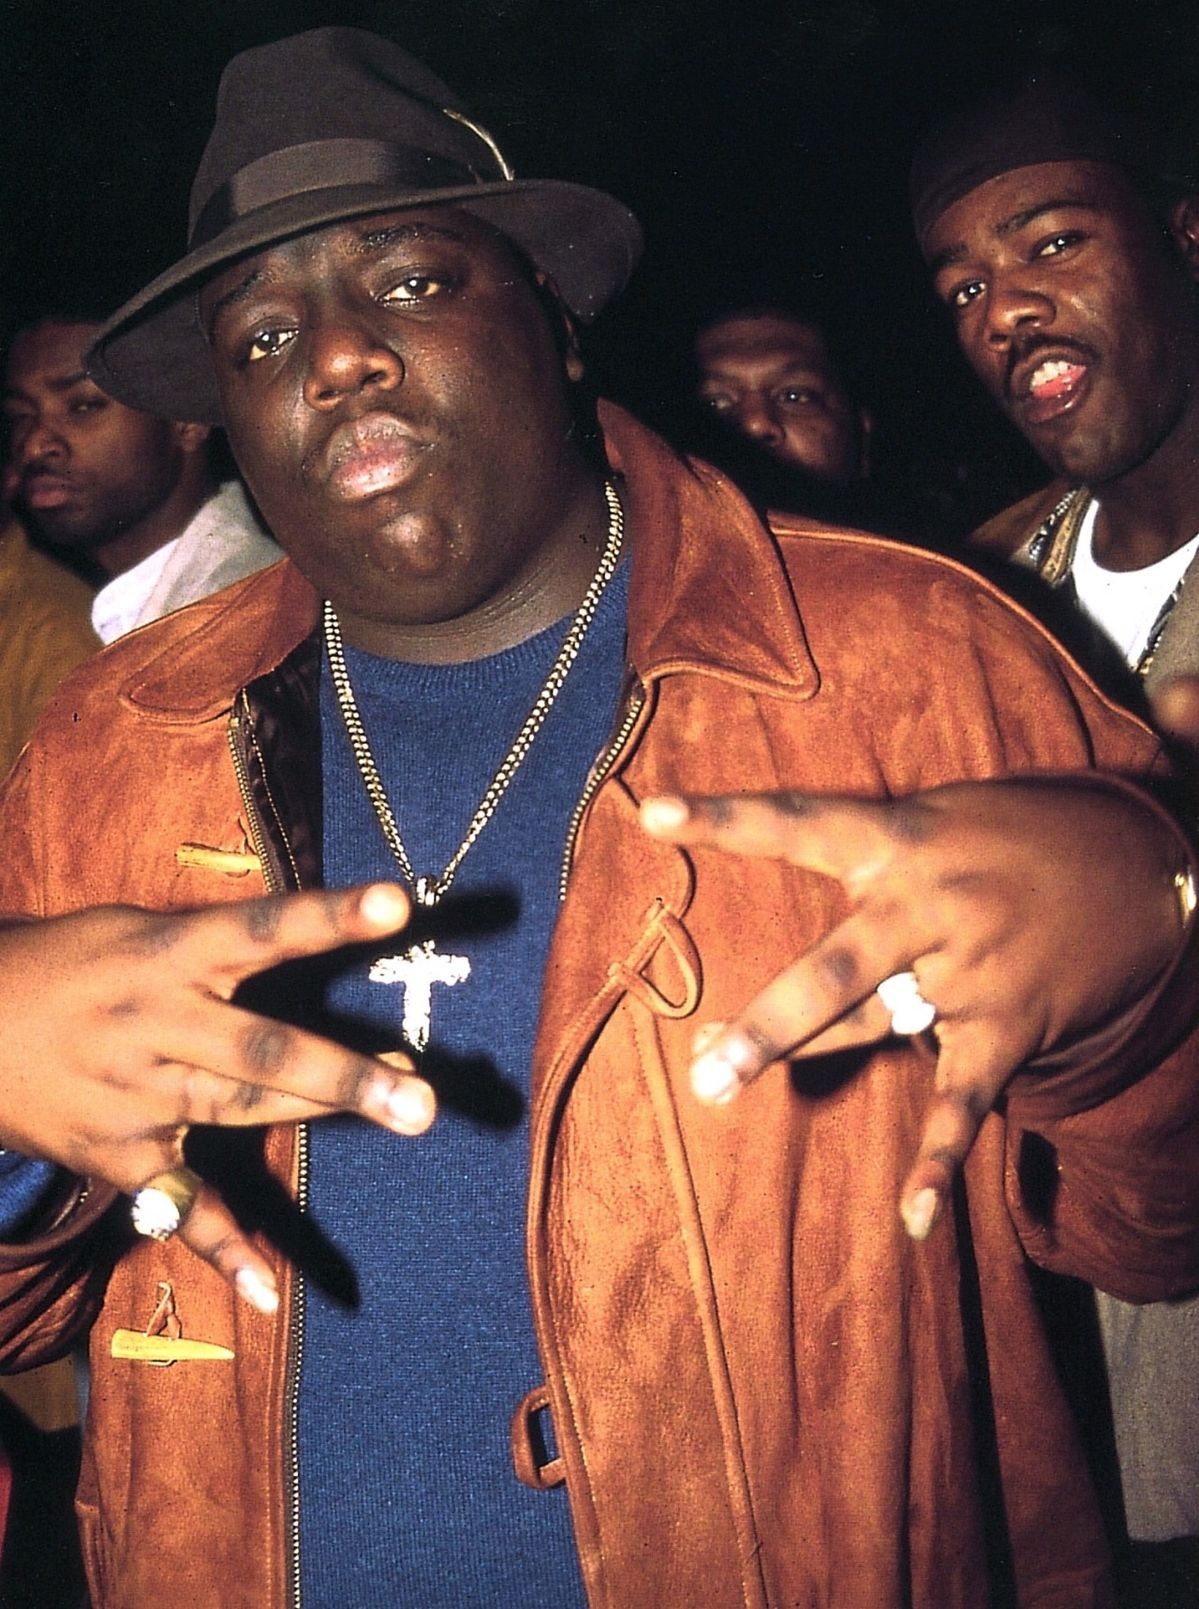 Happy birthday to The Notorious B.I.G! 